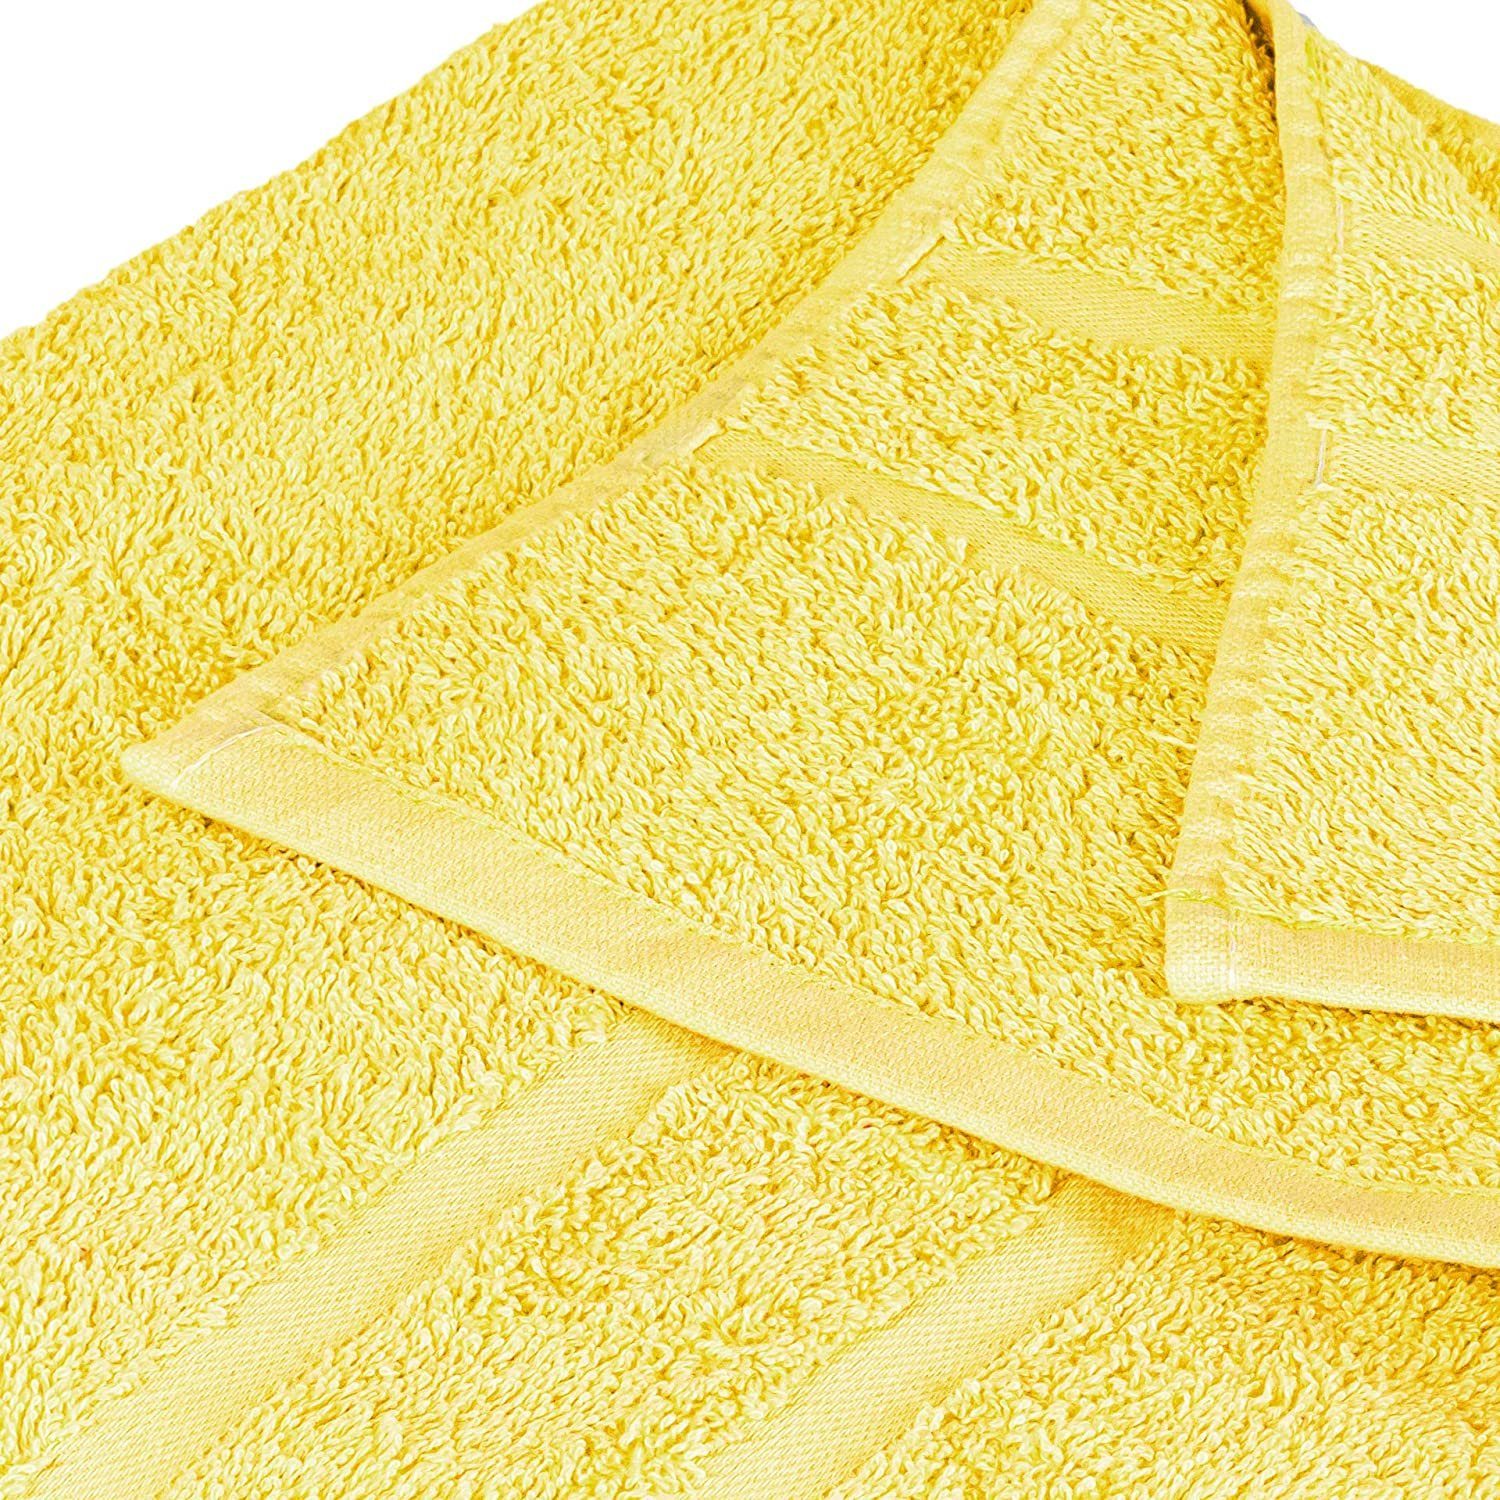 StickandShine Handtuch Handtücher Duschtücher Wahl Baumwolle 500 Badetücher Gästehandtücher Gelb Saunatücher 100% GSM zur in